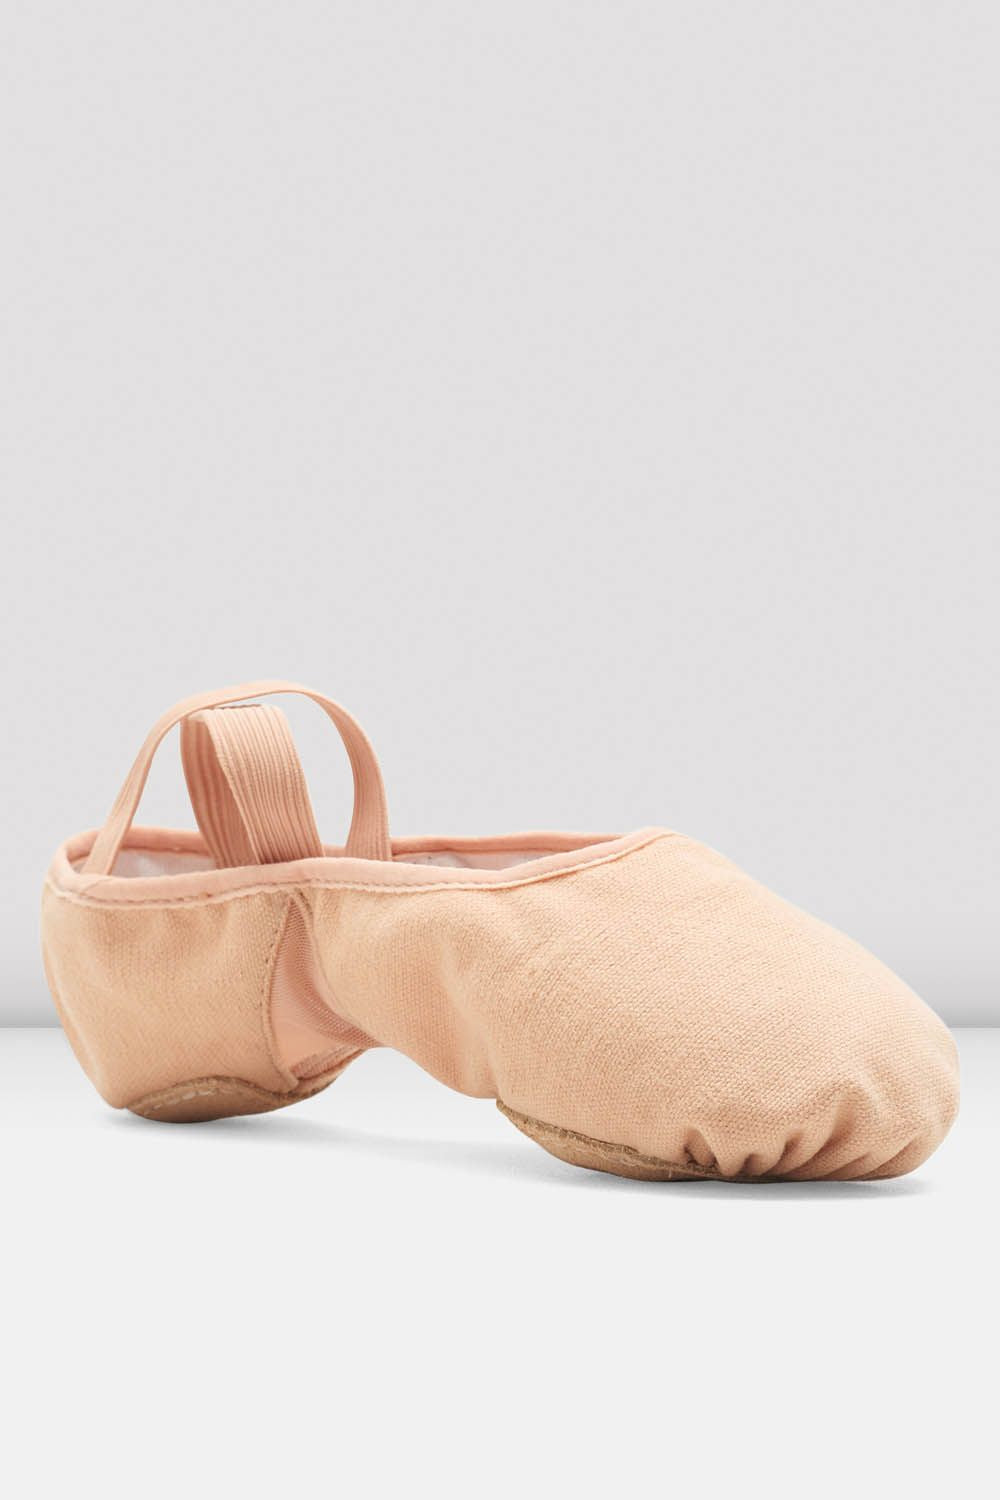 Bloch Ladies' Pump Ballet Shoe